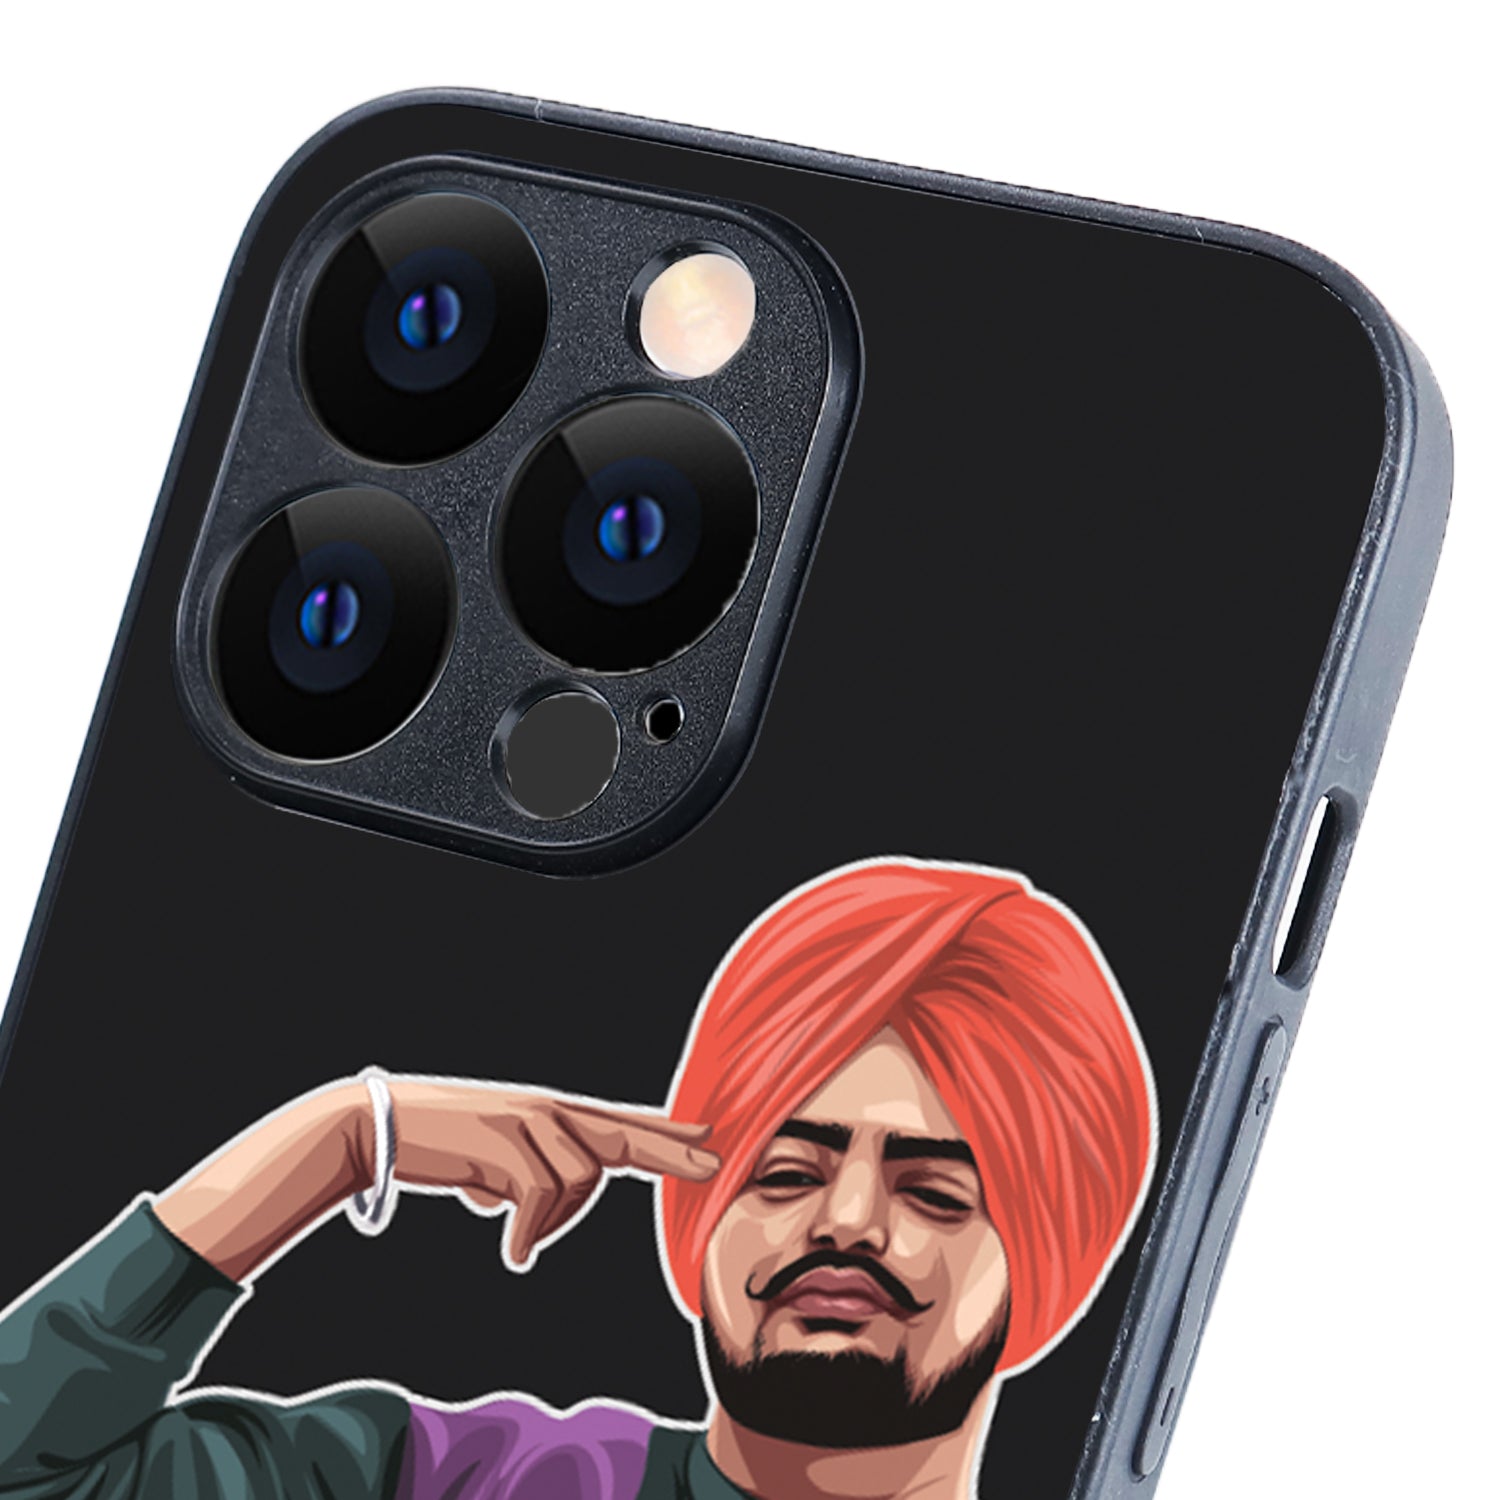 The Last Ride Sidhu Moosewala iPhone 13 Pro Case